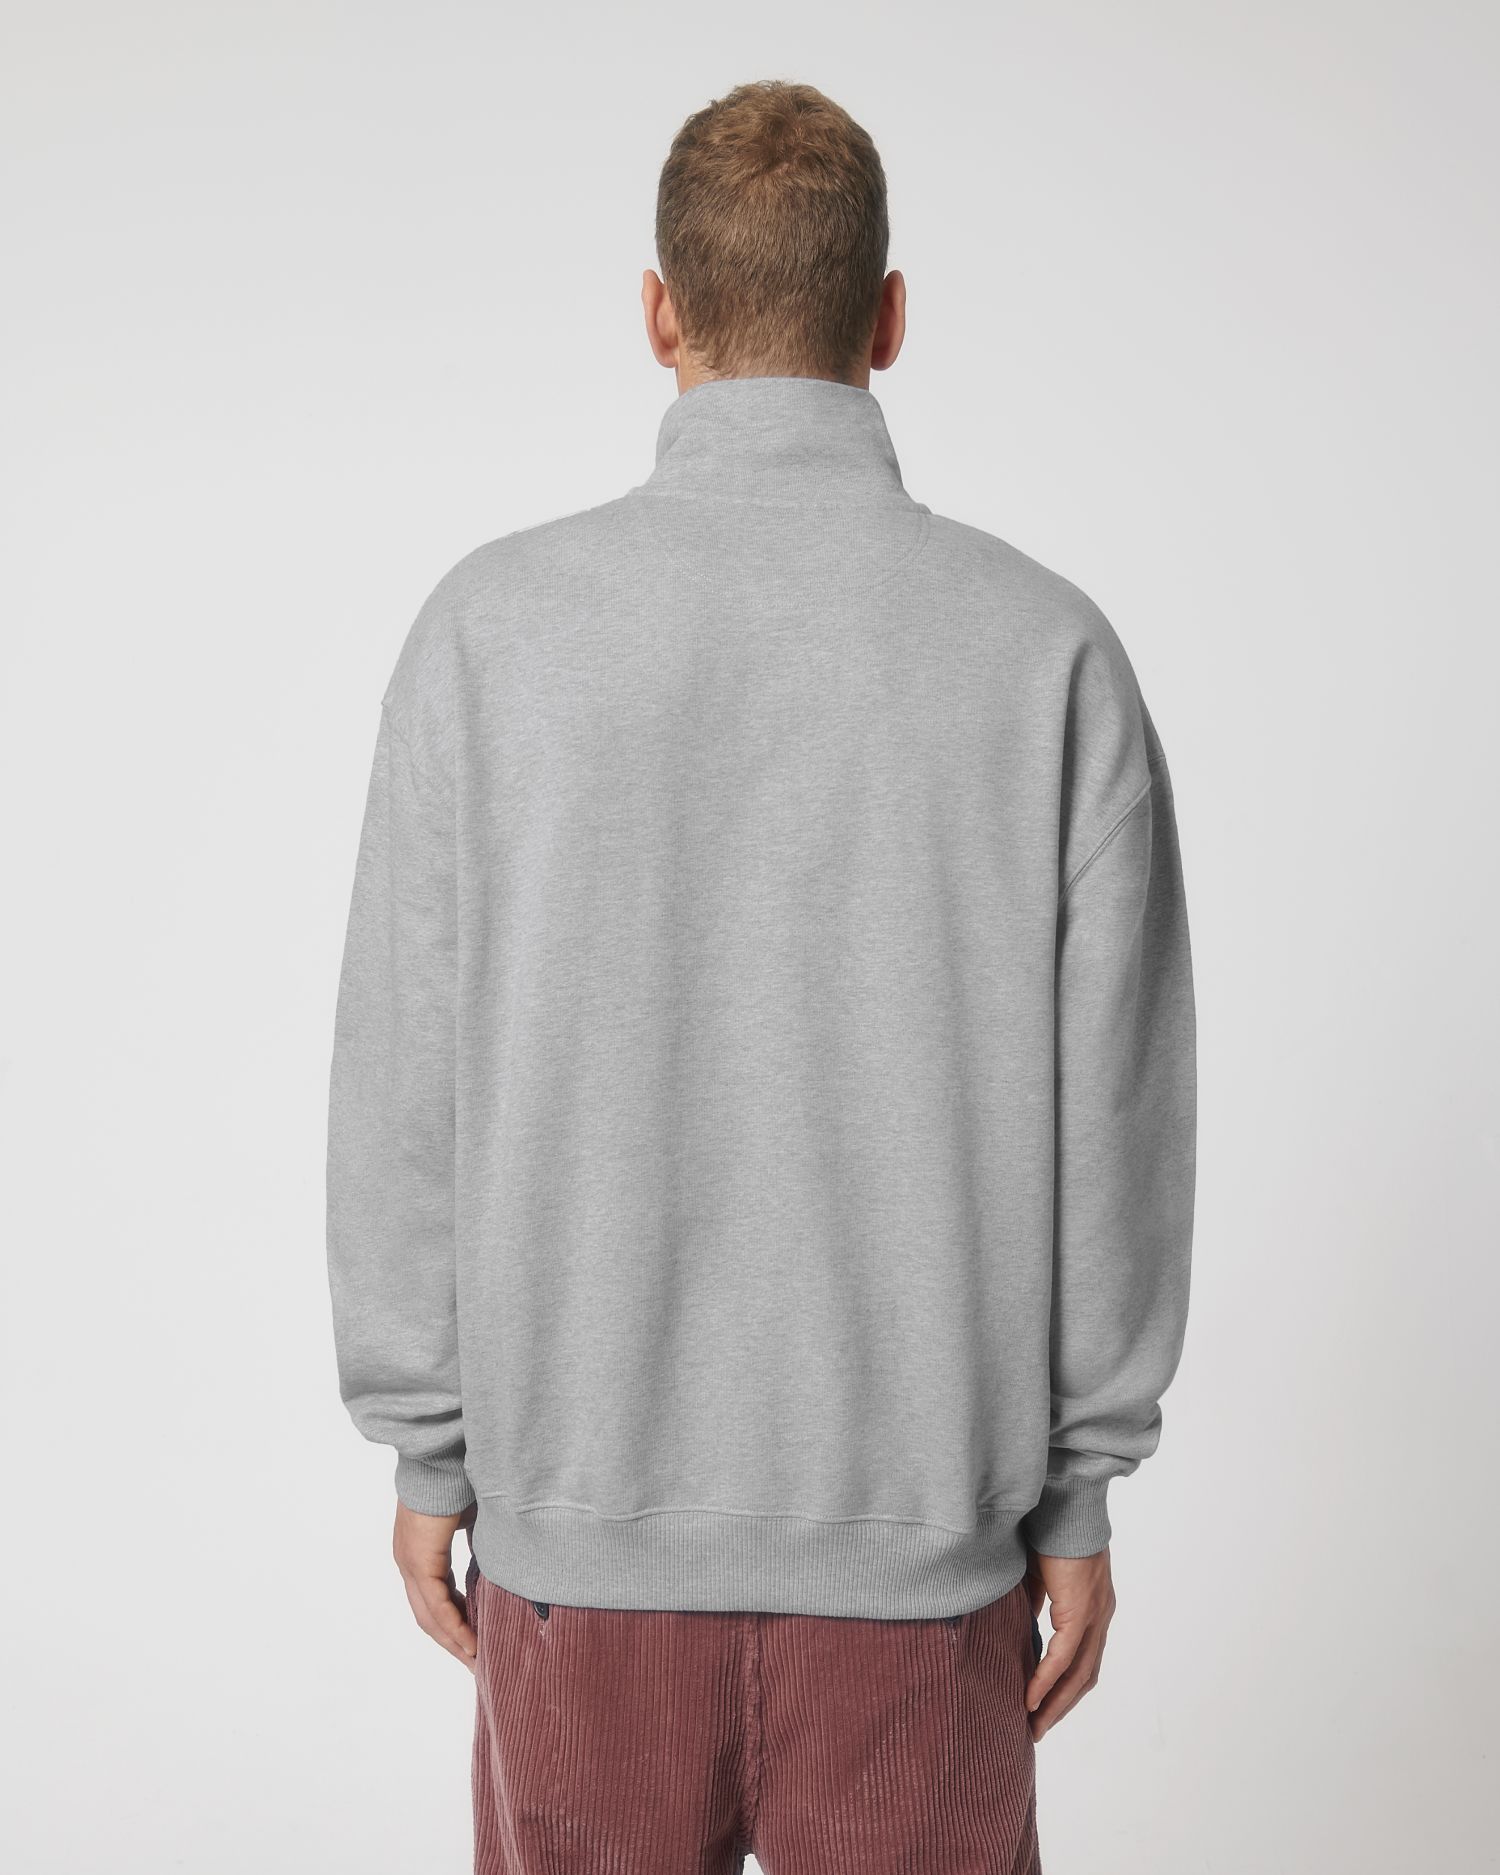 Crew neck sweatshirts Miller Dry in Farbe Heather Grey